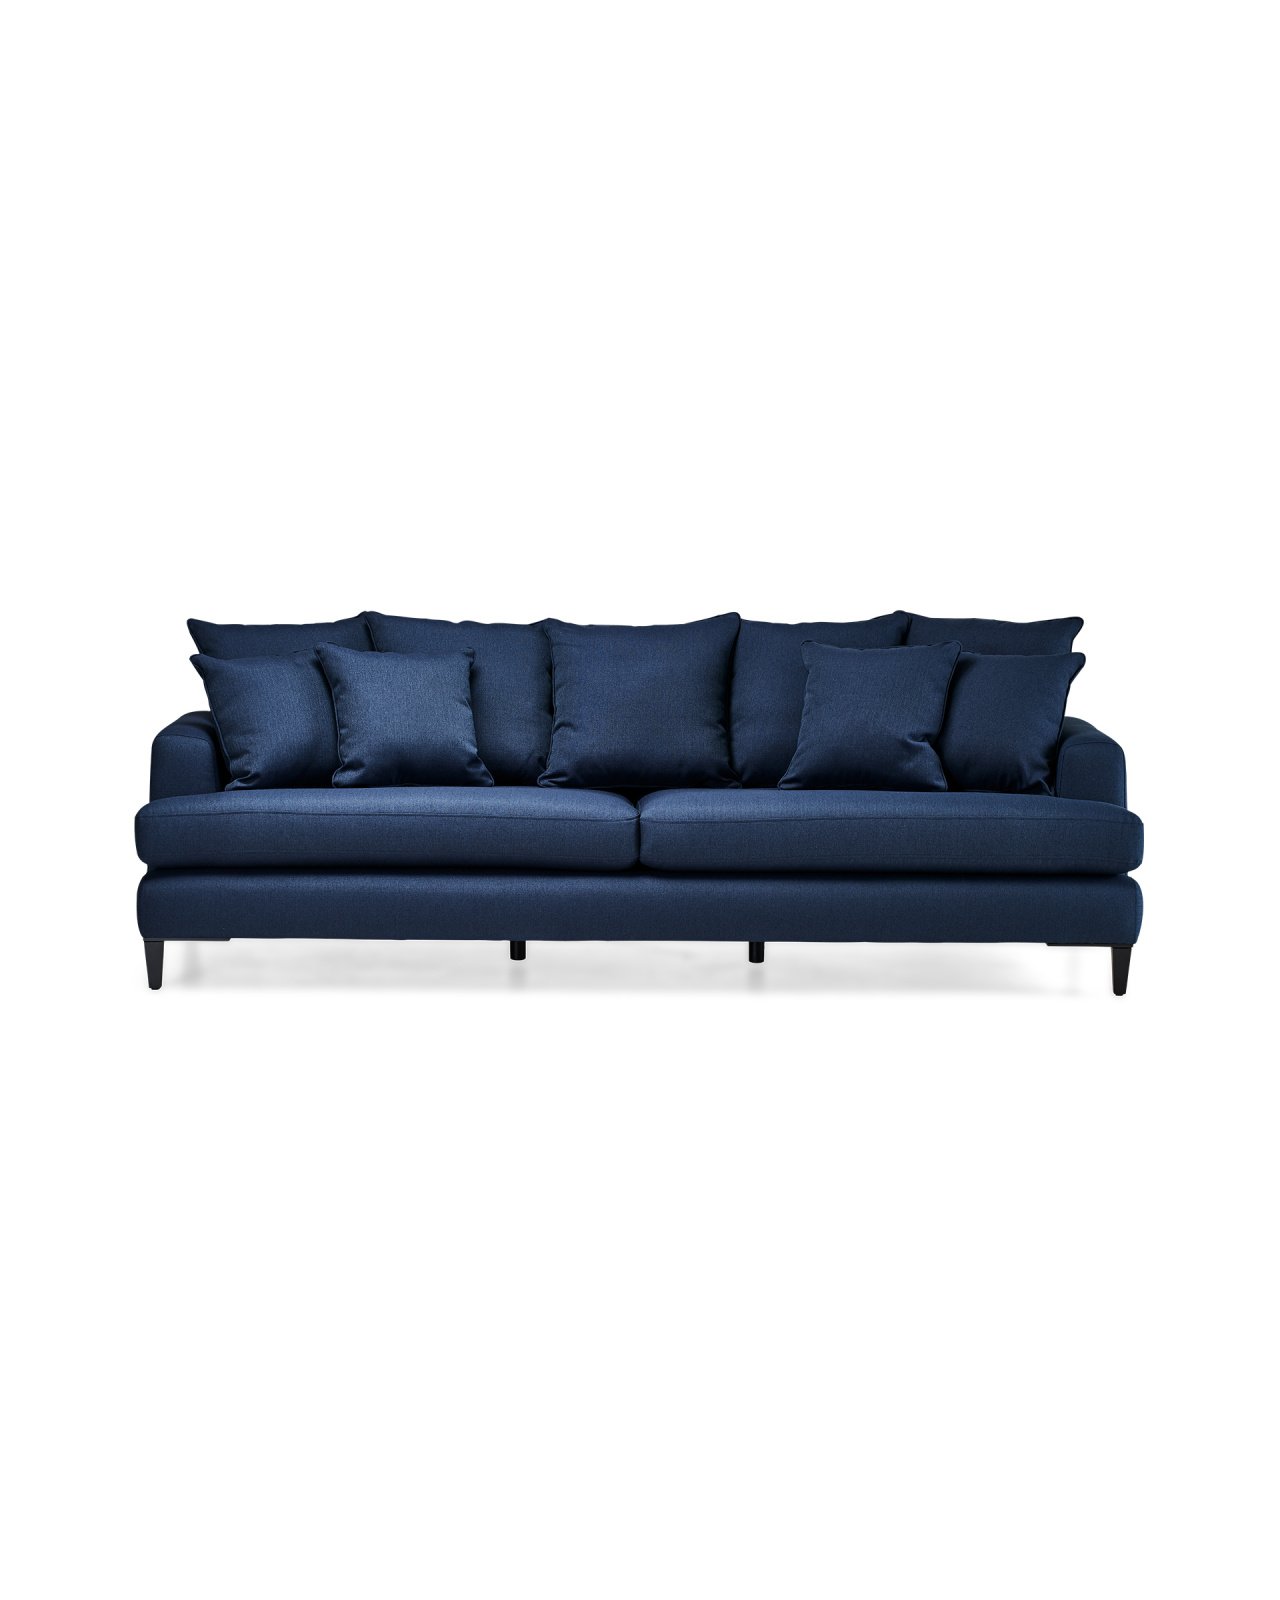 Los Angeles sofa, 4-seater, indigo